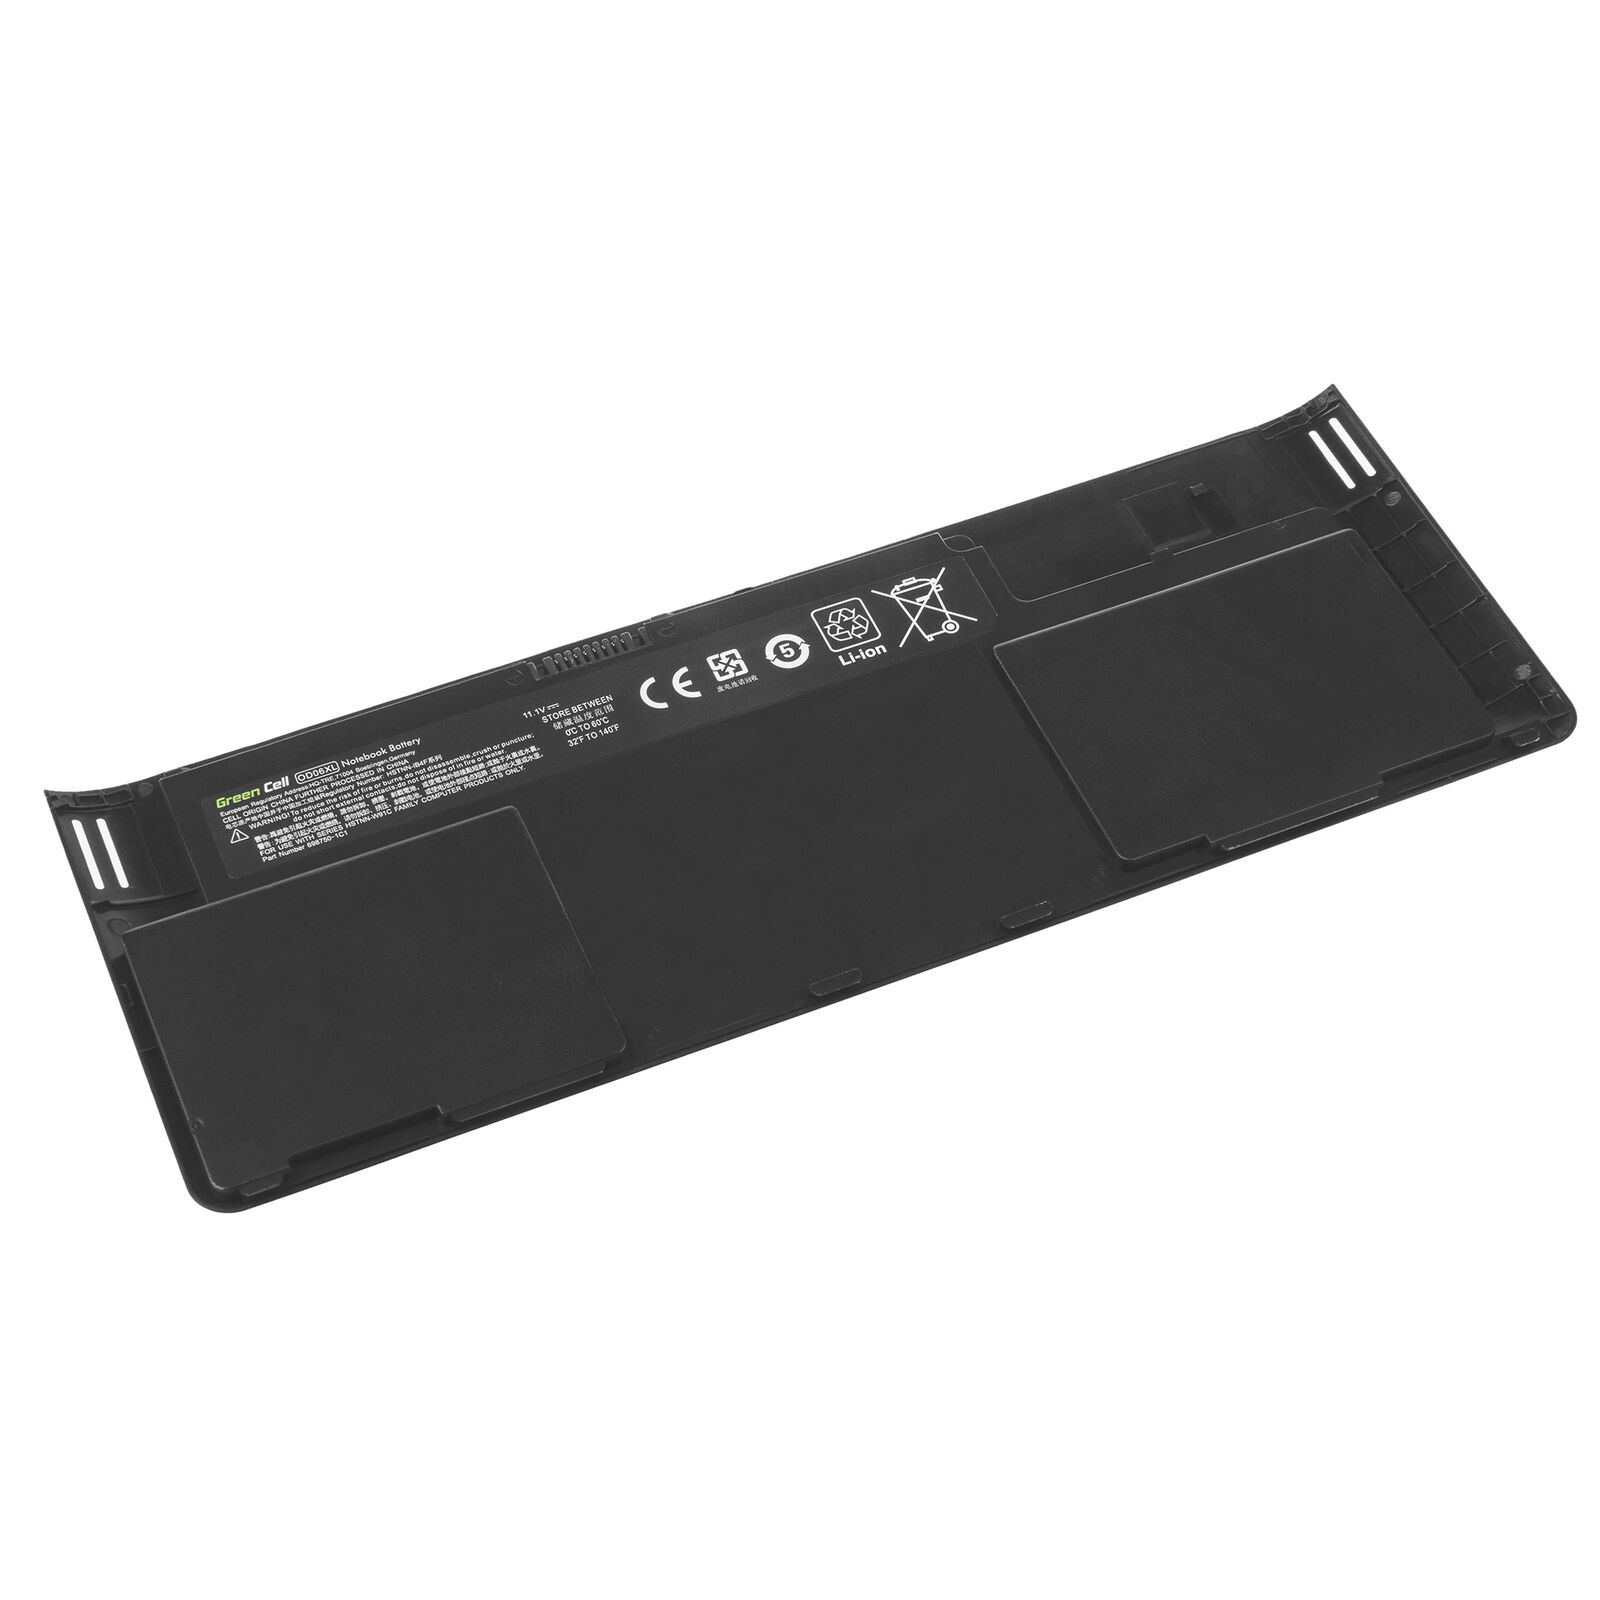 OD06XL H6L25AA HSTNN-W91C 698943-001 HP EliteBook Revolve 810 G1 G2 compatible battery